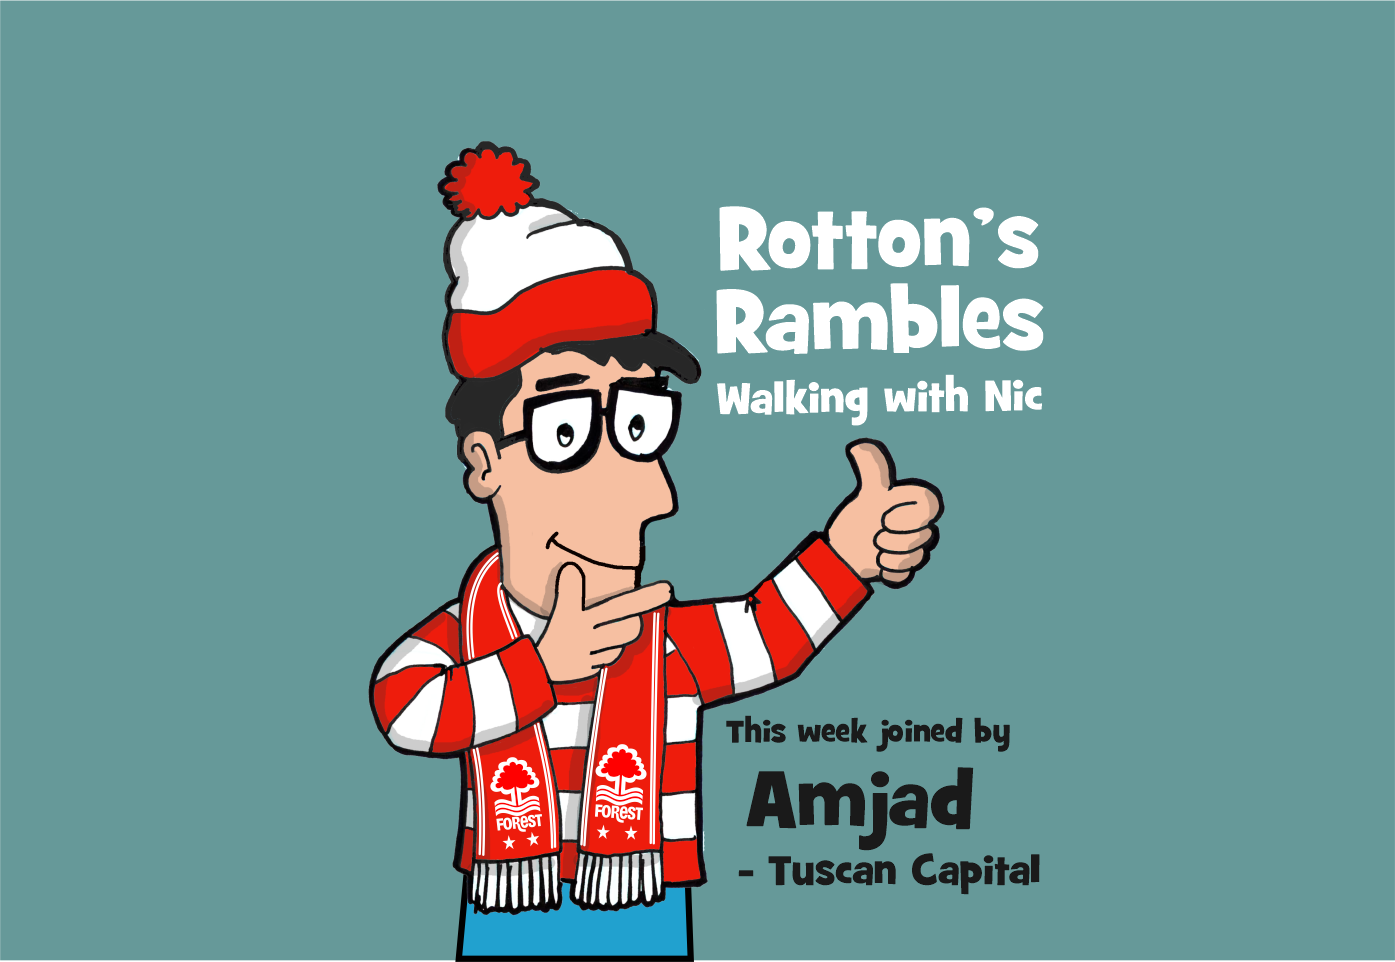 Rotton's Rambles with Amjad